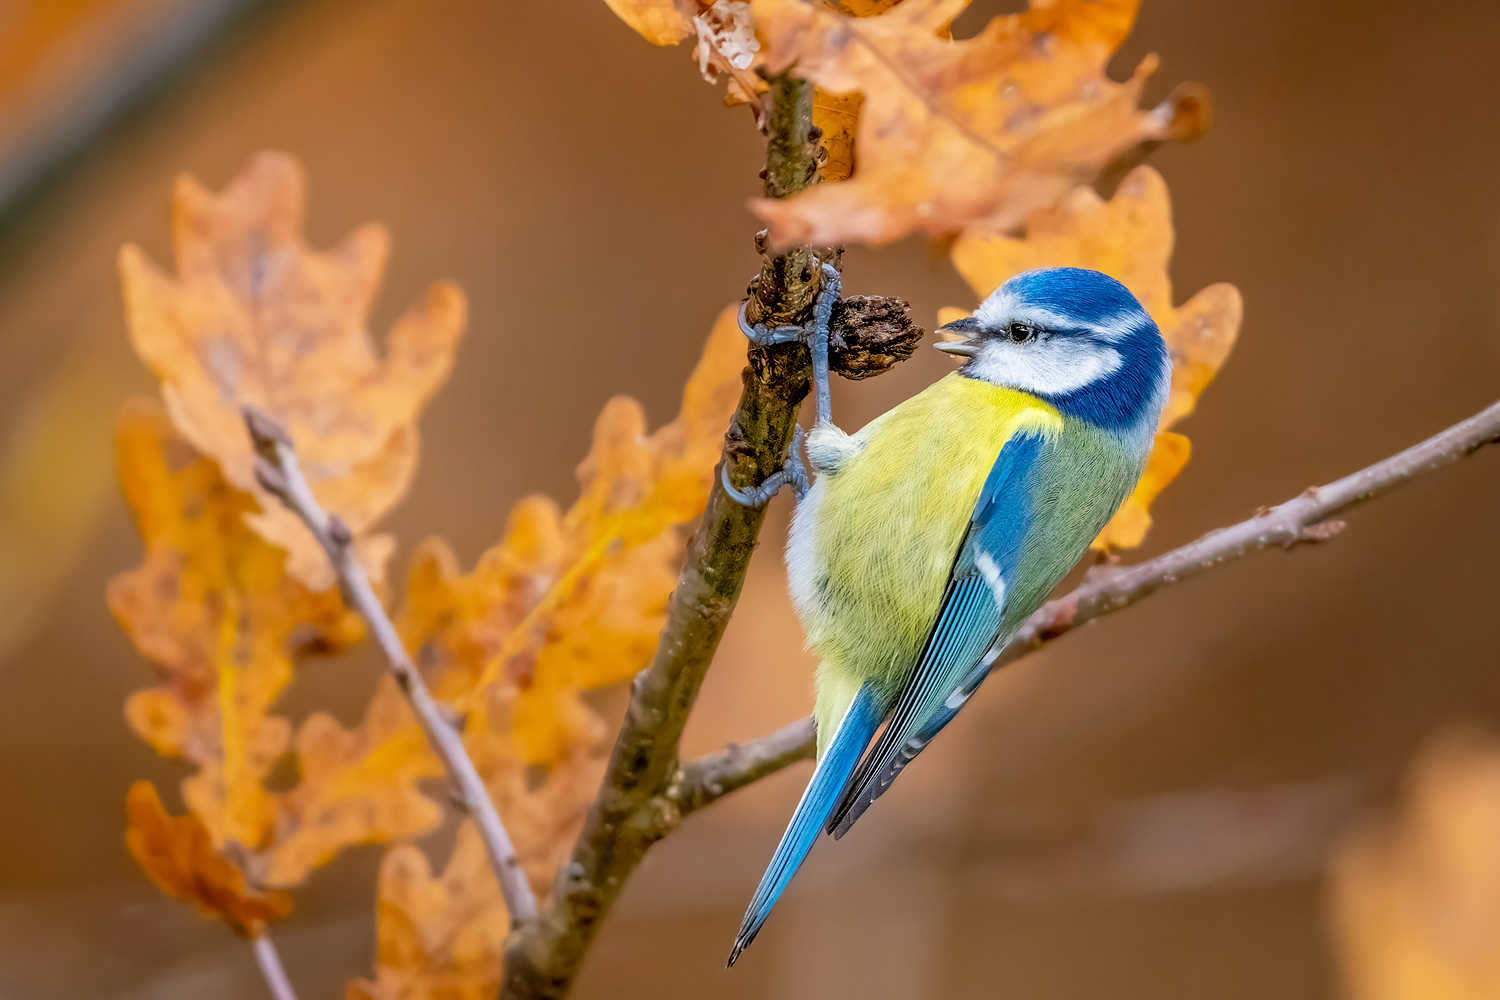 Modraszka (Parus caeruleus) - Śpiewaczka estradowa